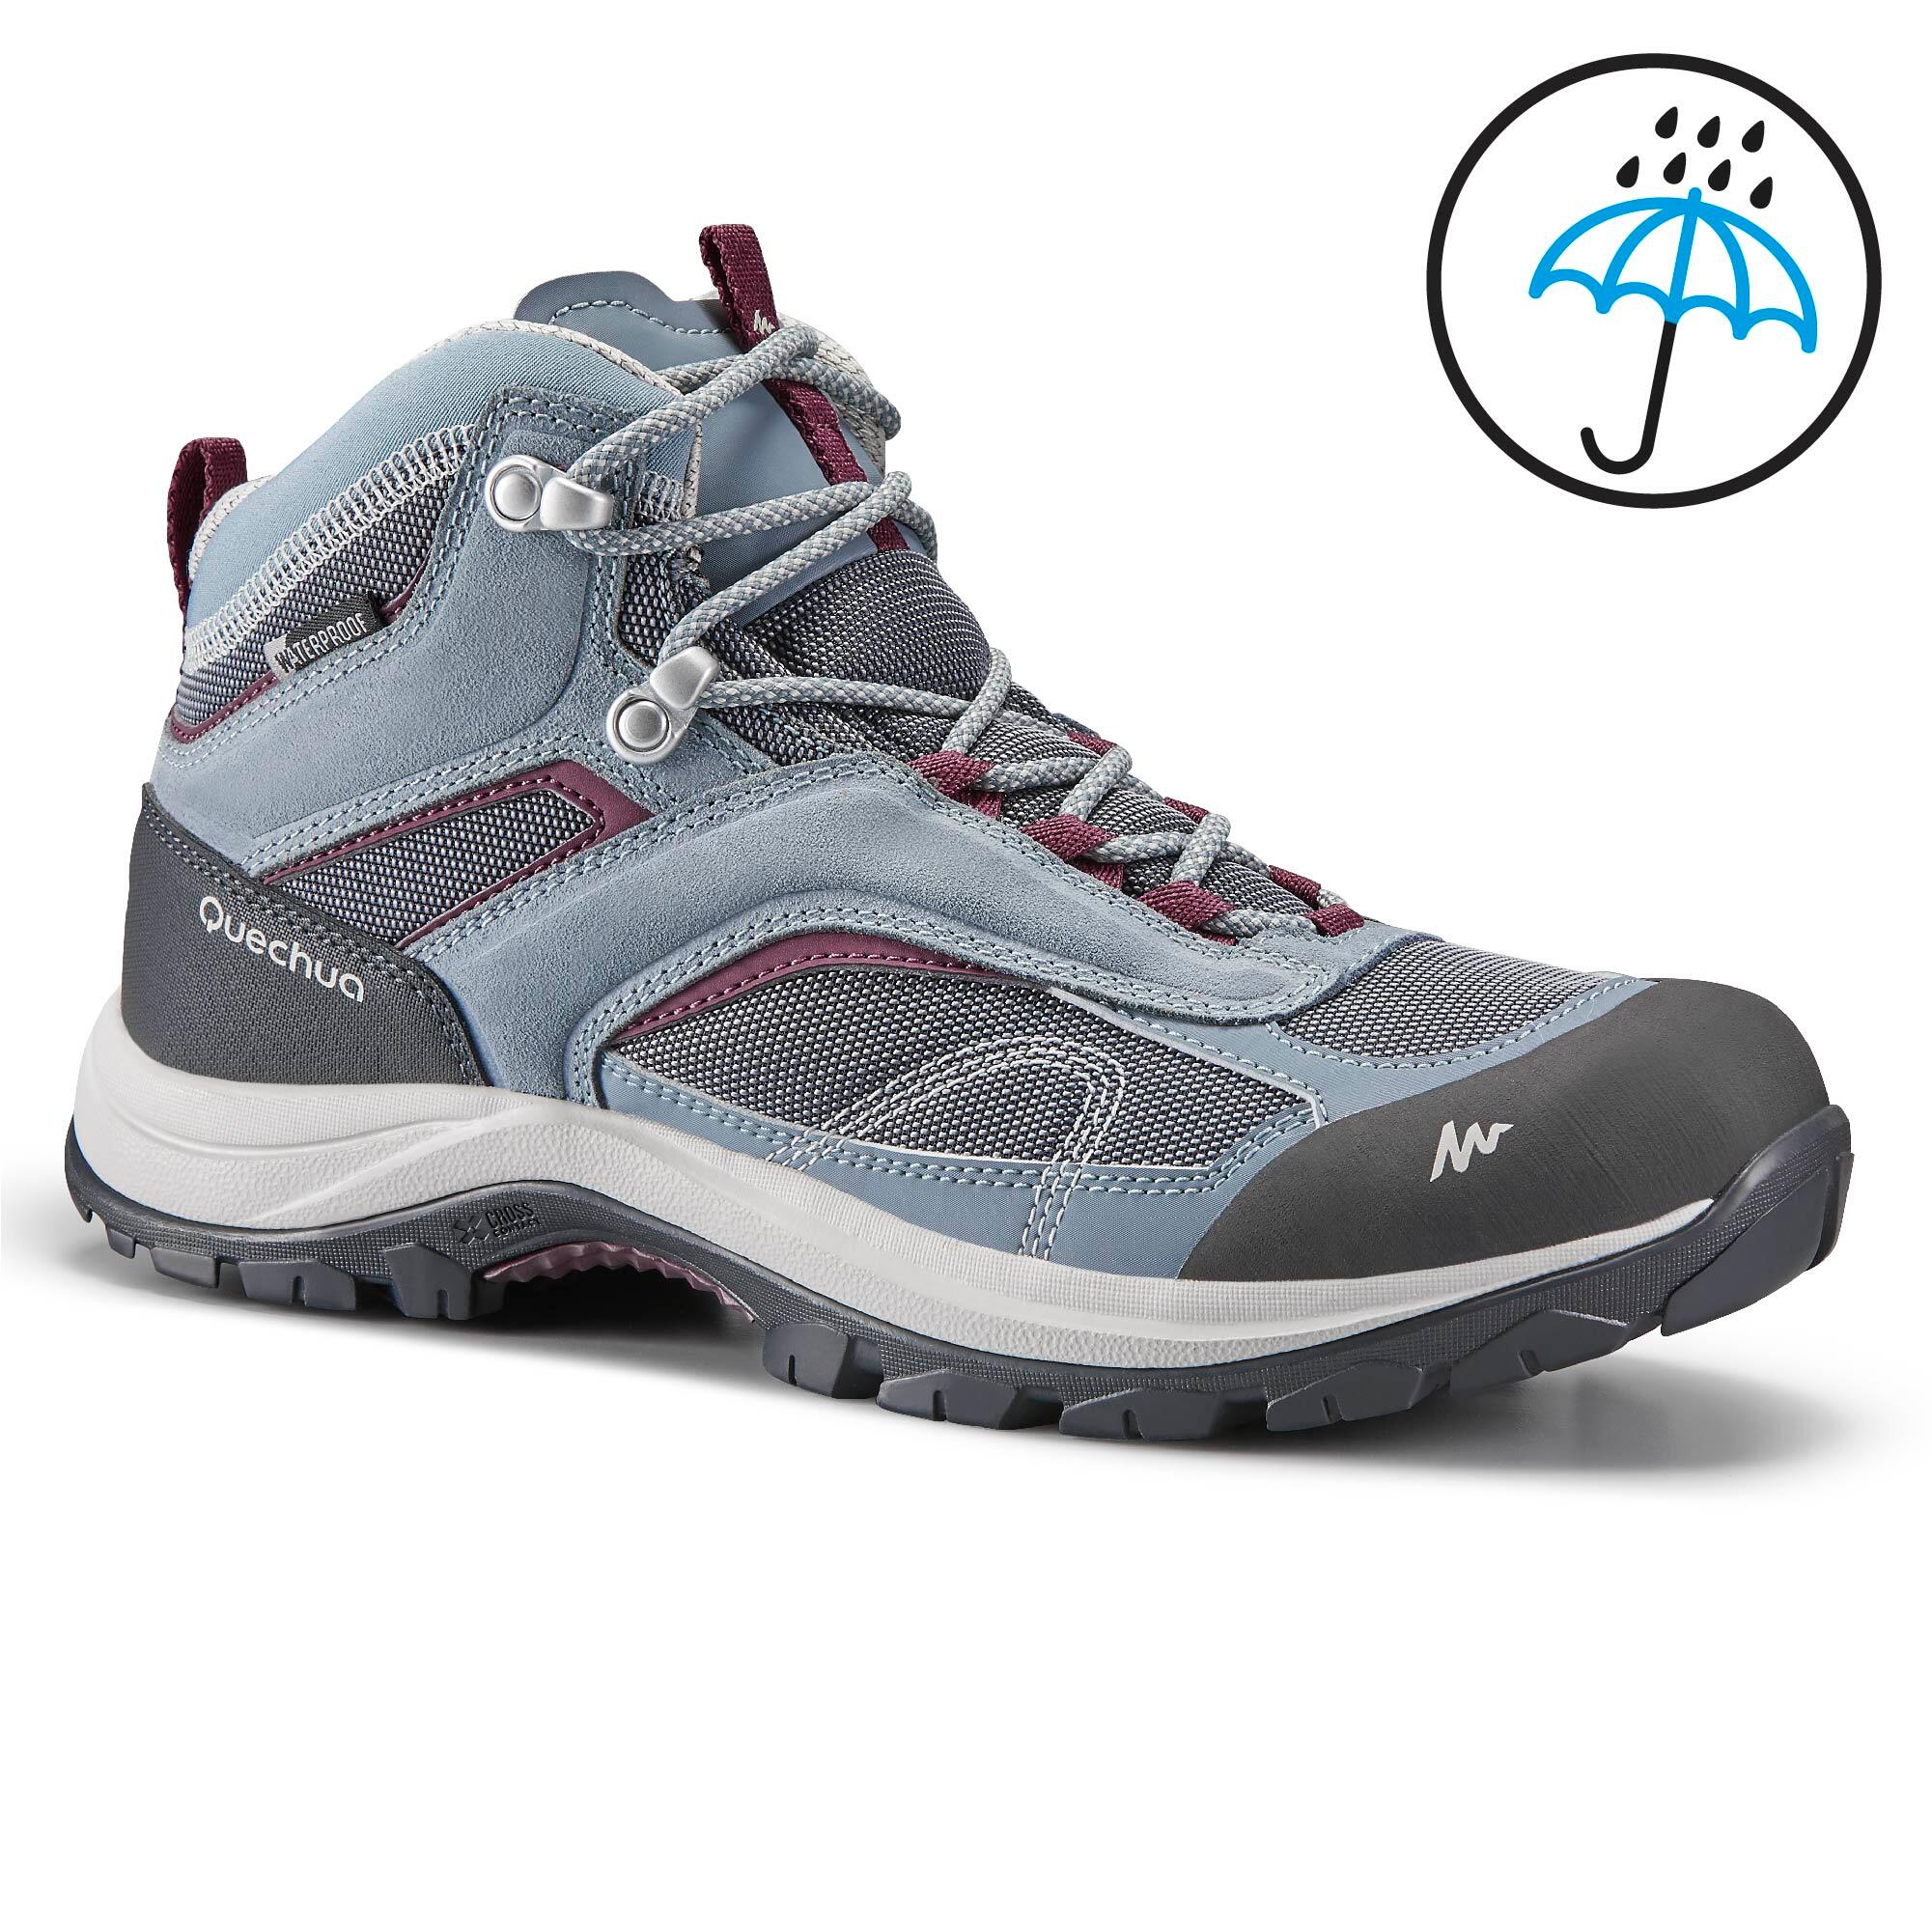 Waterproof Shoes - Rain Shoes for Men 